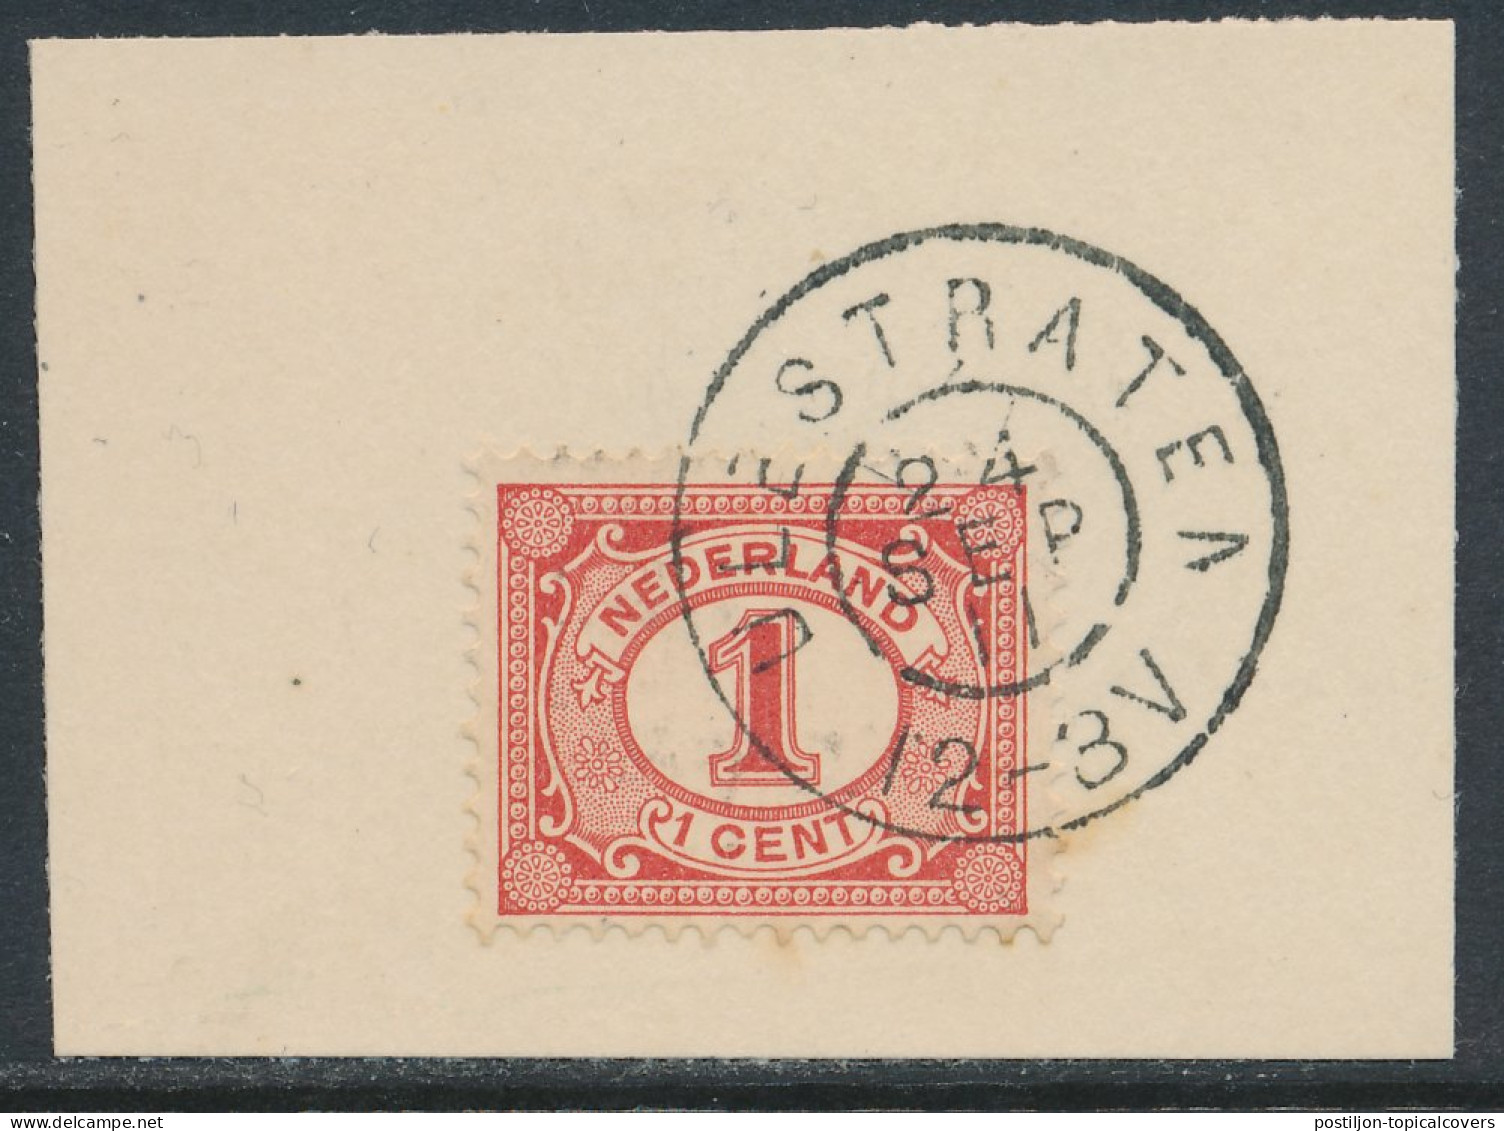 Grootrondstempel Ulestraten 1911 - Poststempel